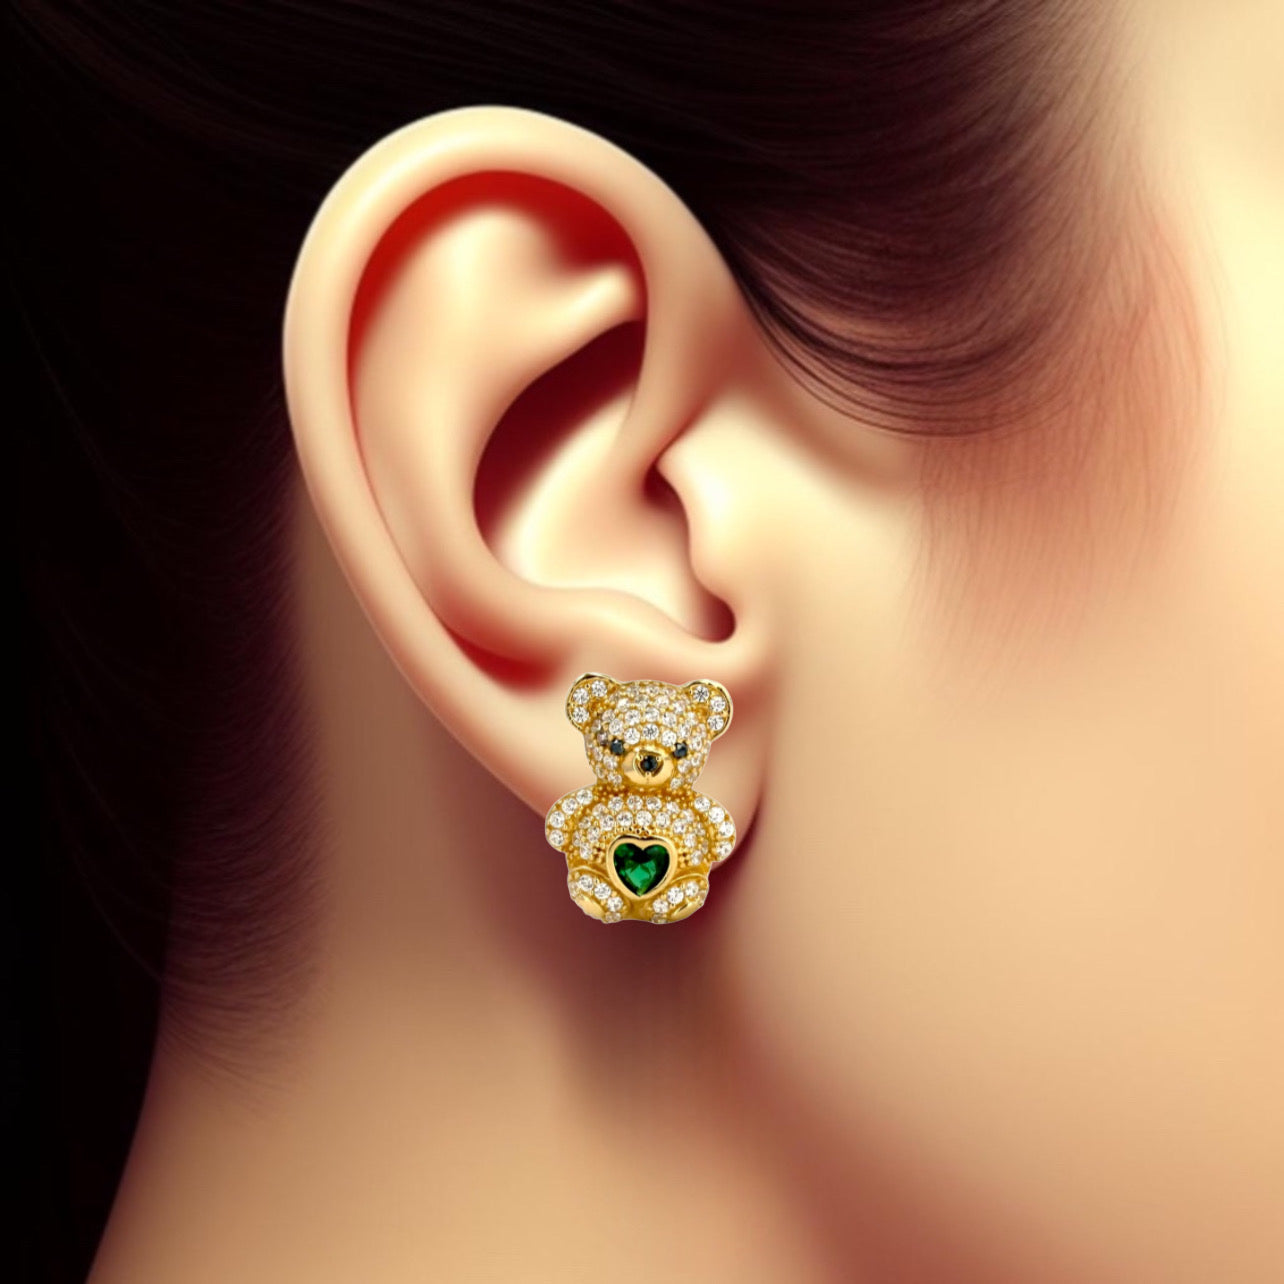 14k yellow gold big green Teddy bear earrings